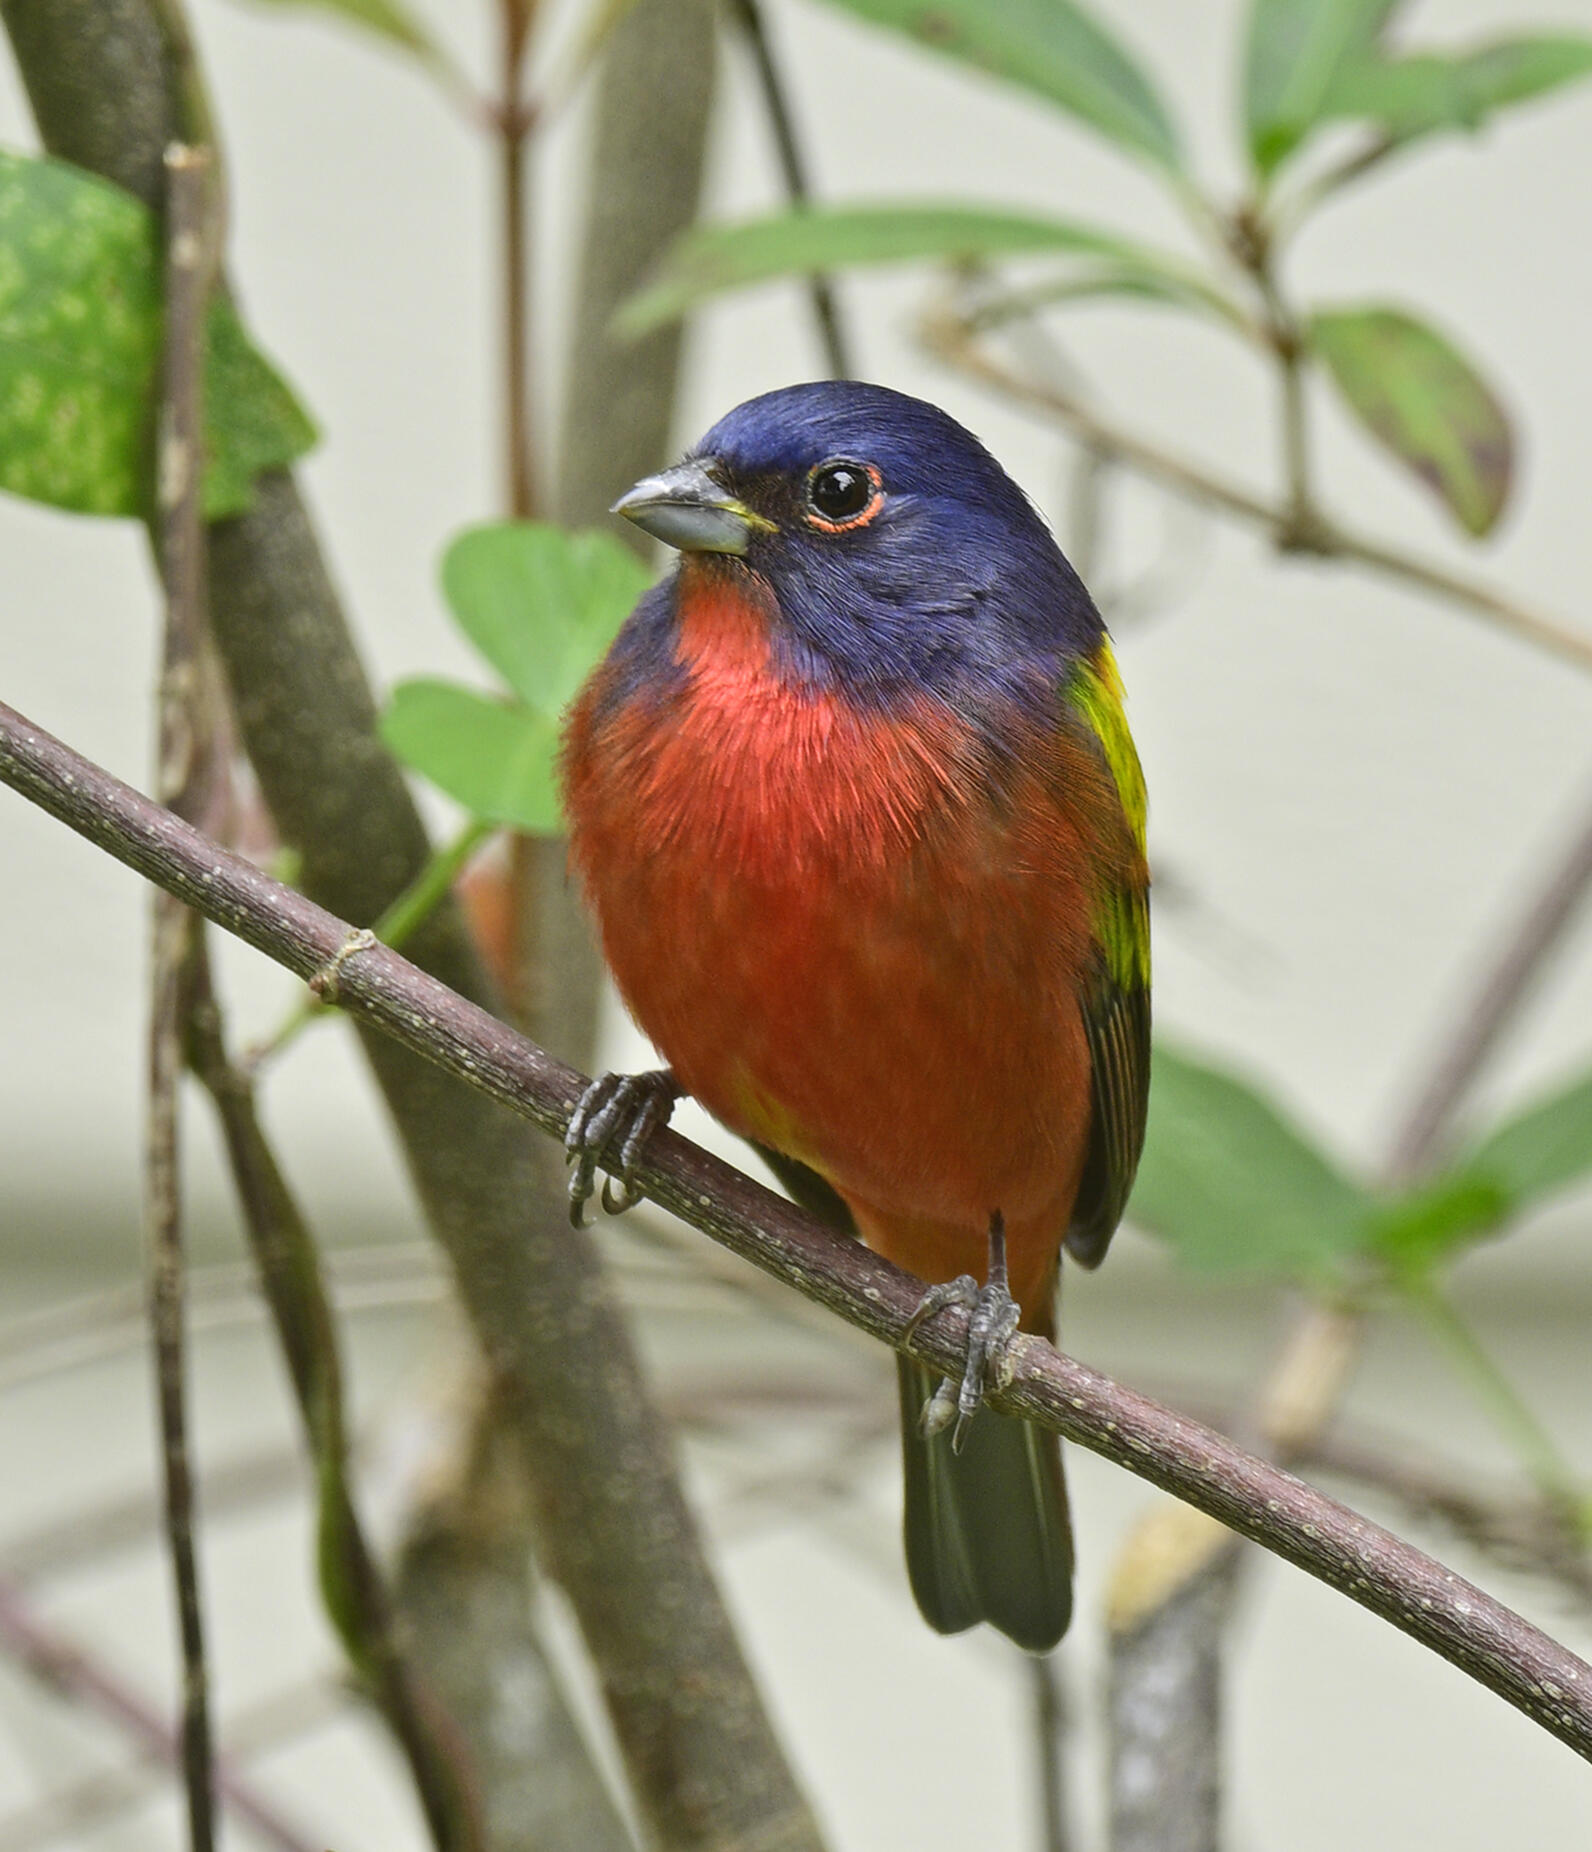 A colorful songbird